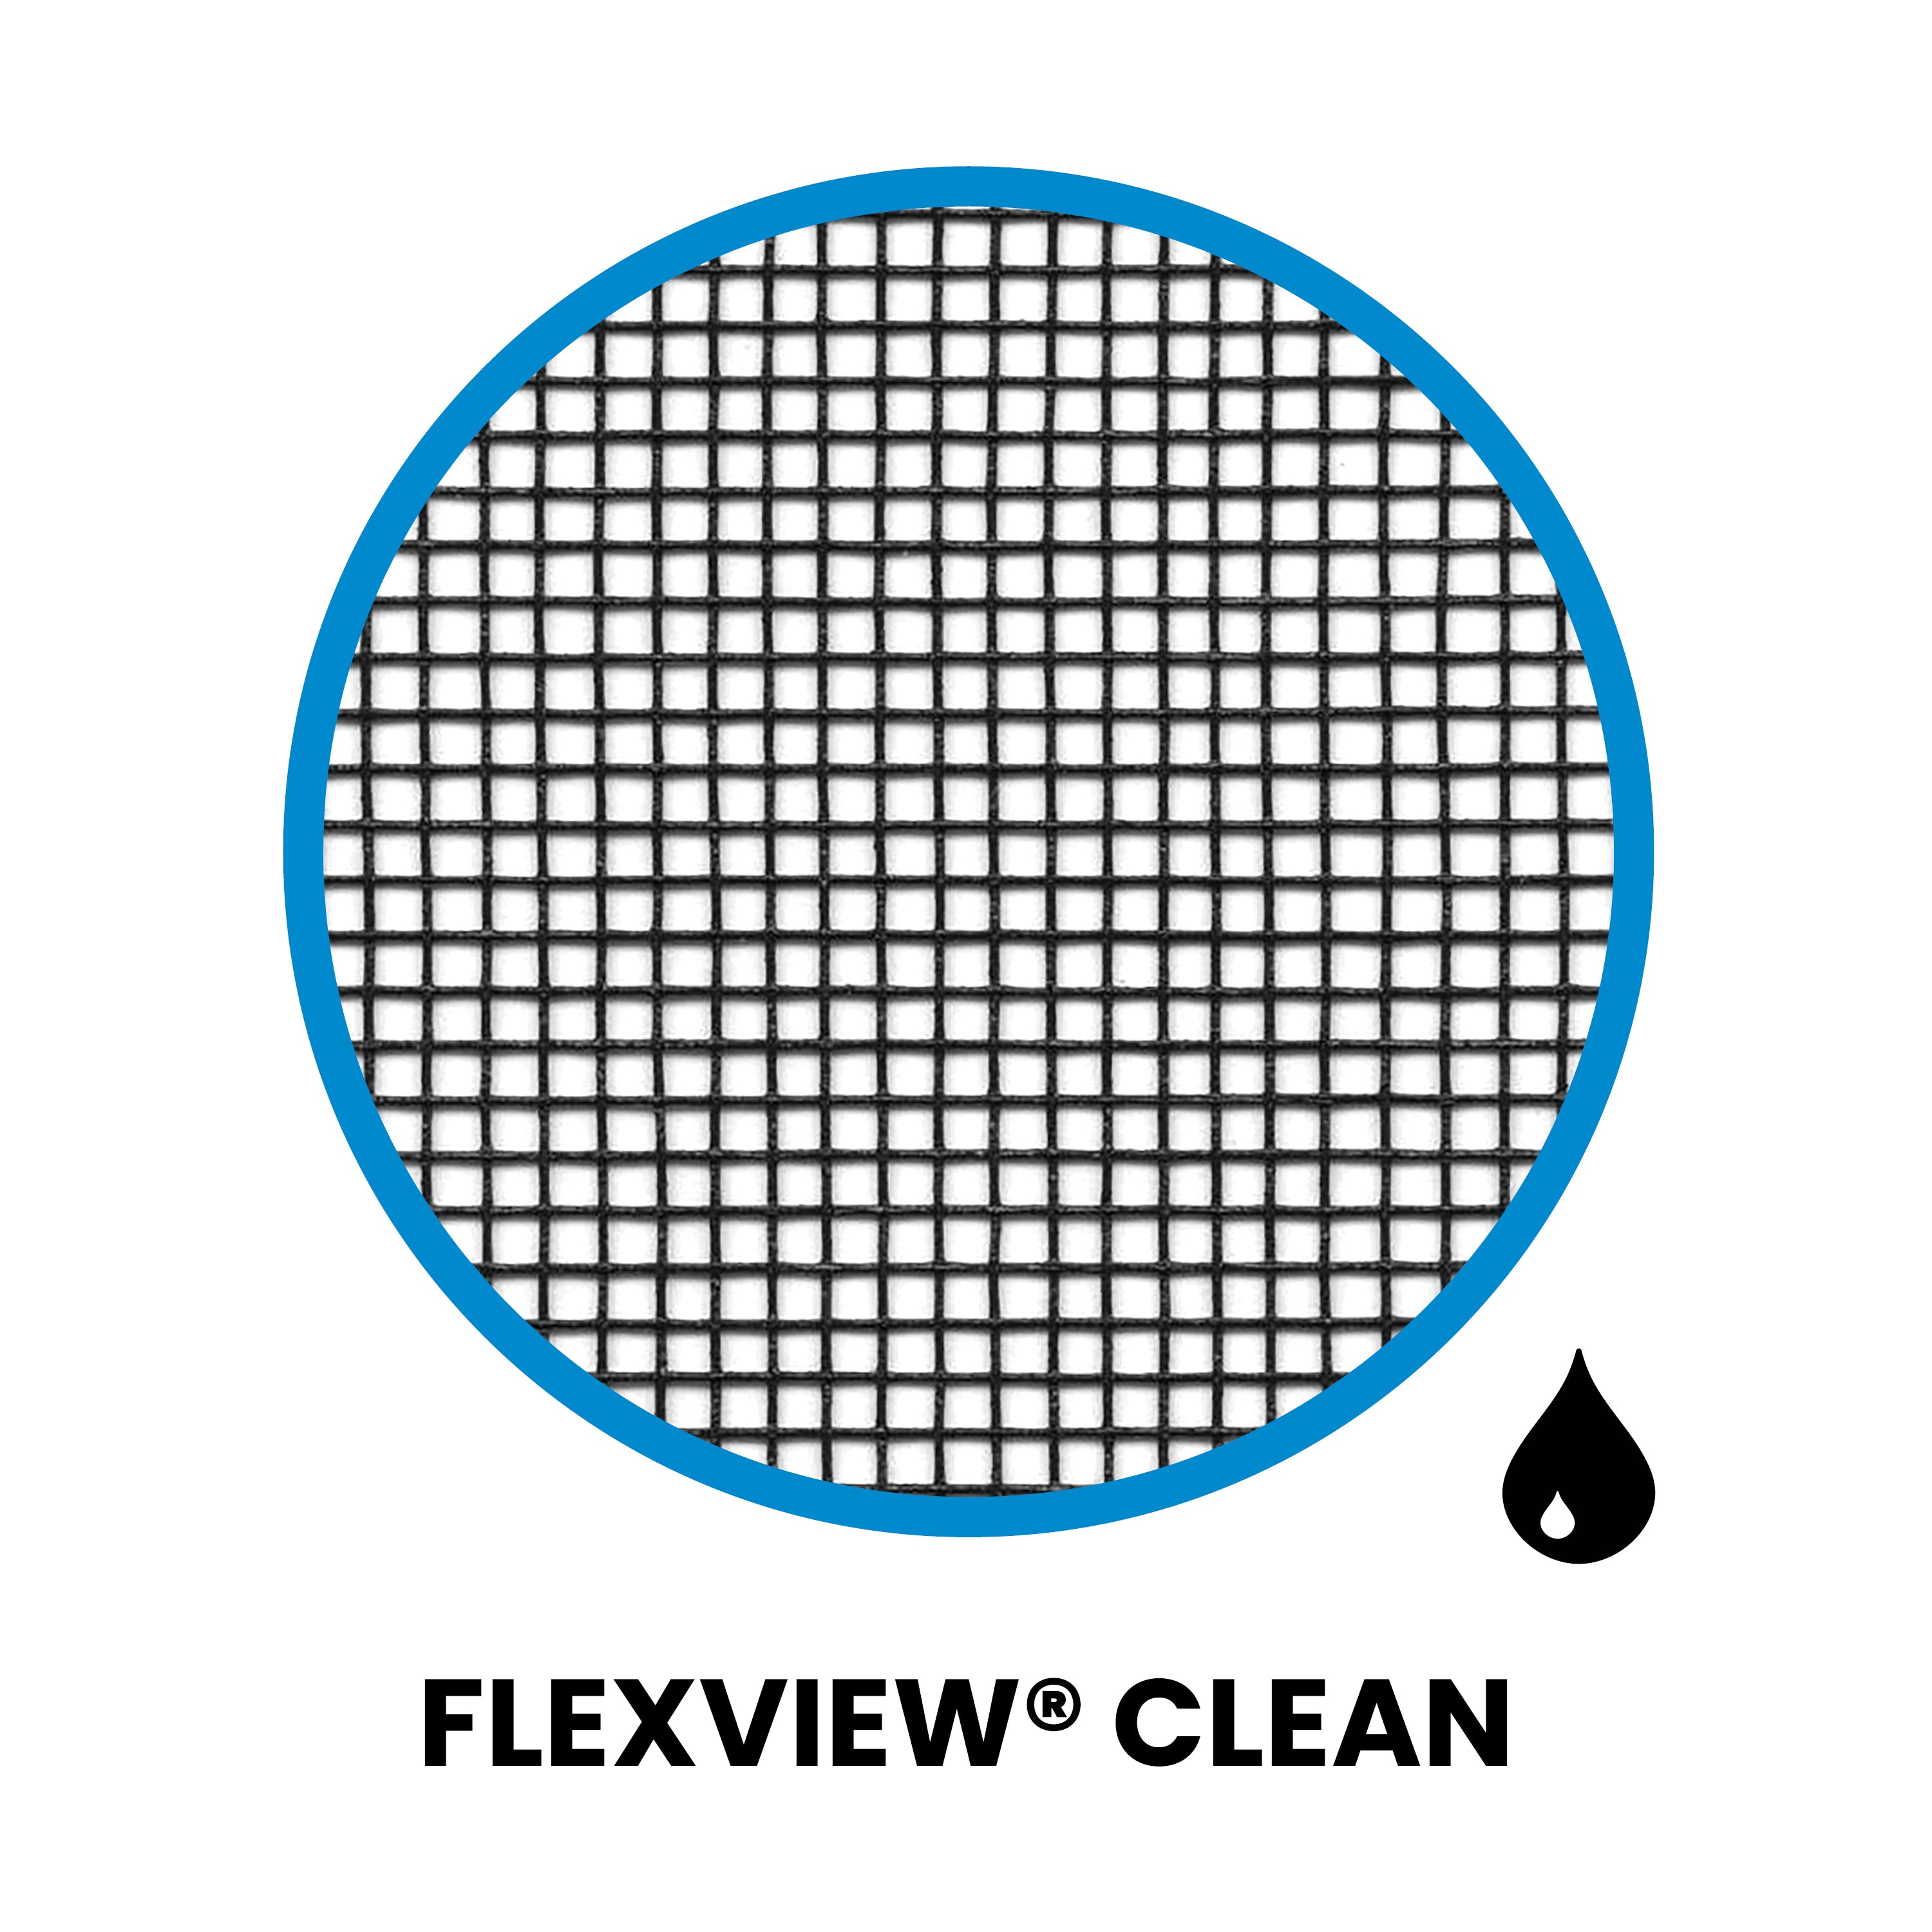 FS-Flexview-Clean_Swatch_with-Name-1.jpg__PID:5141b31d-d6e0-4b2d-93f0-5a57eb4412a3